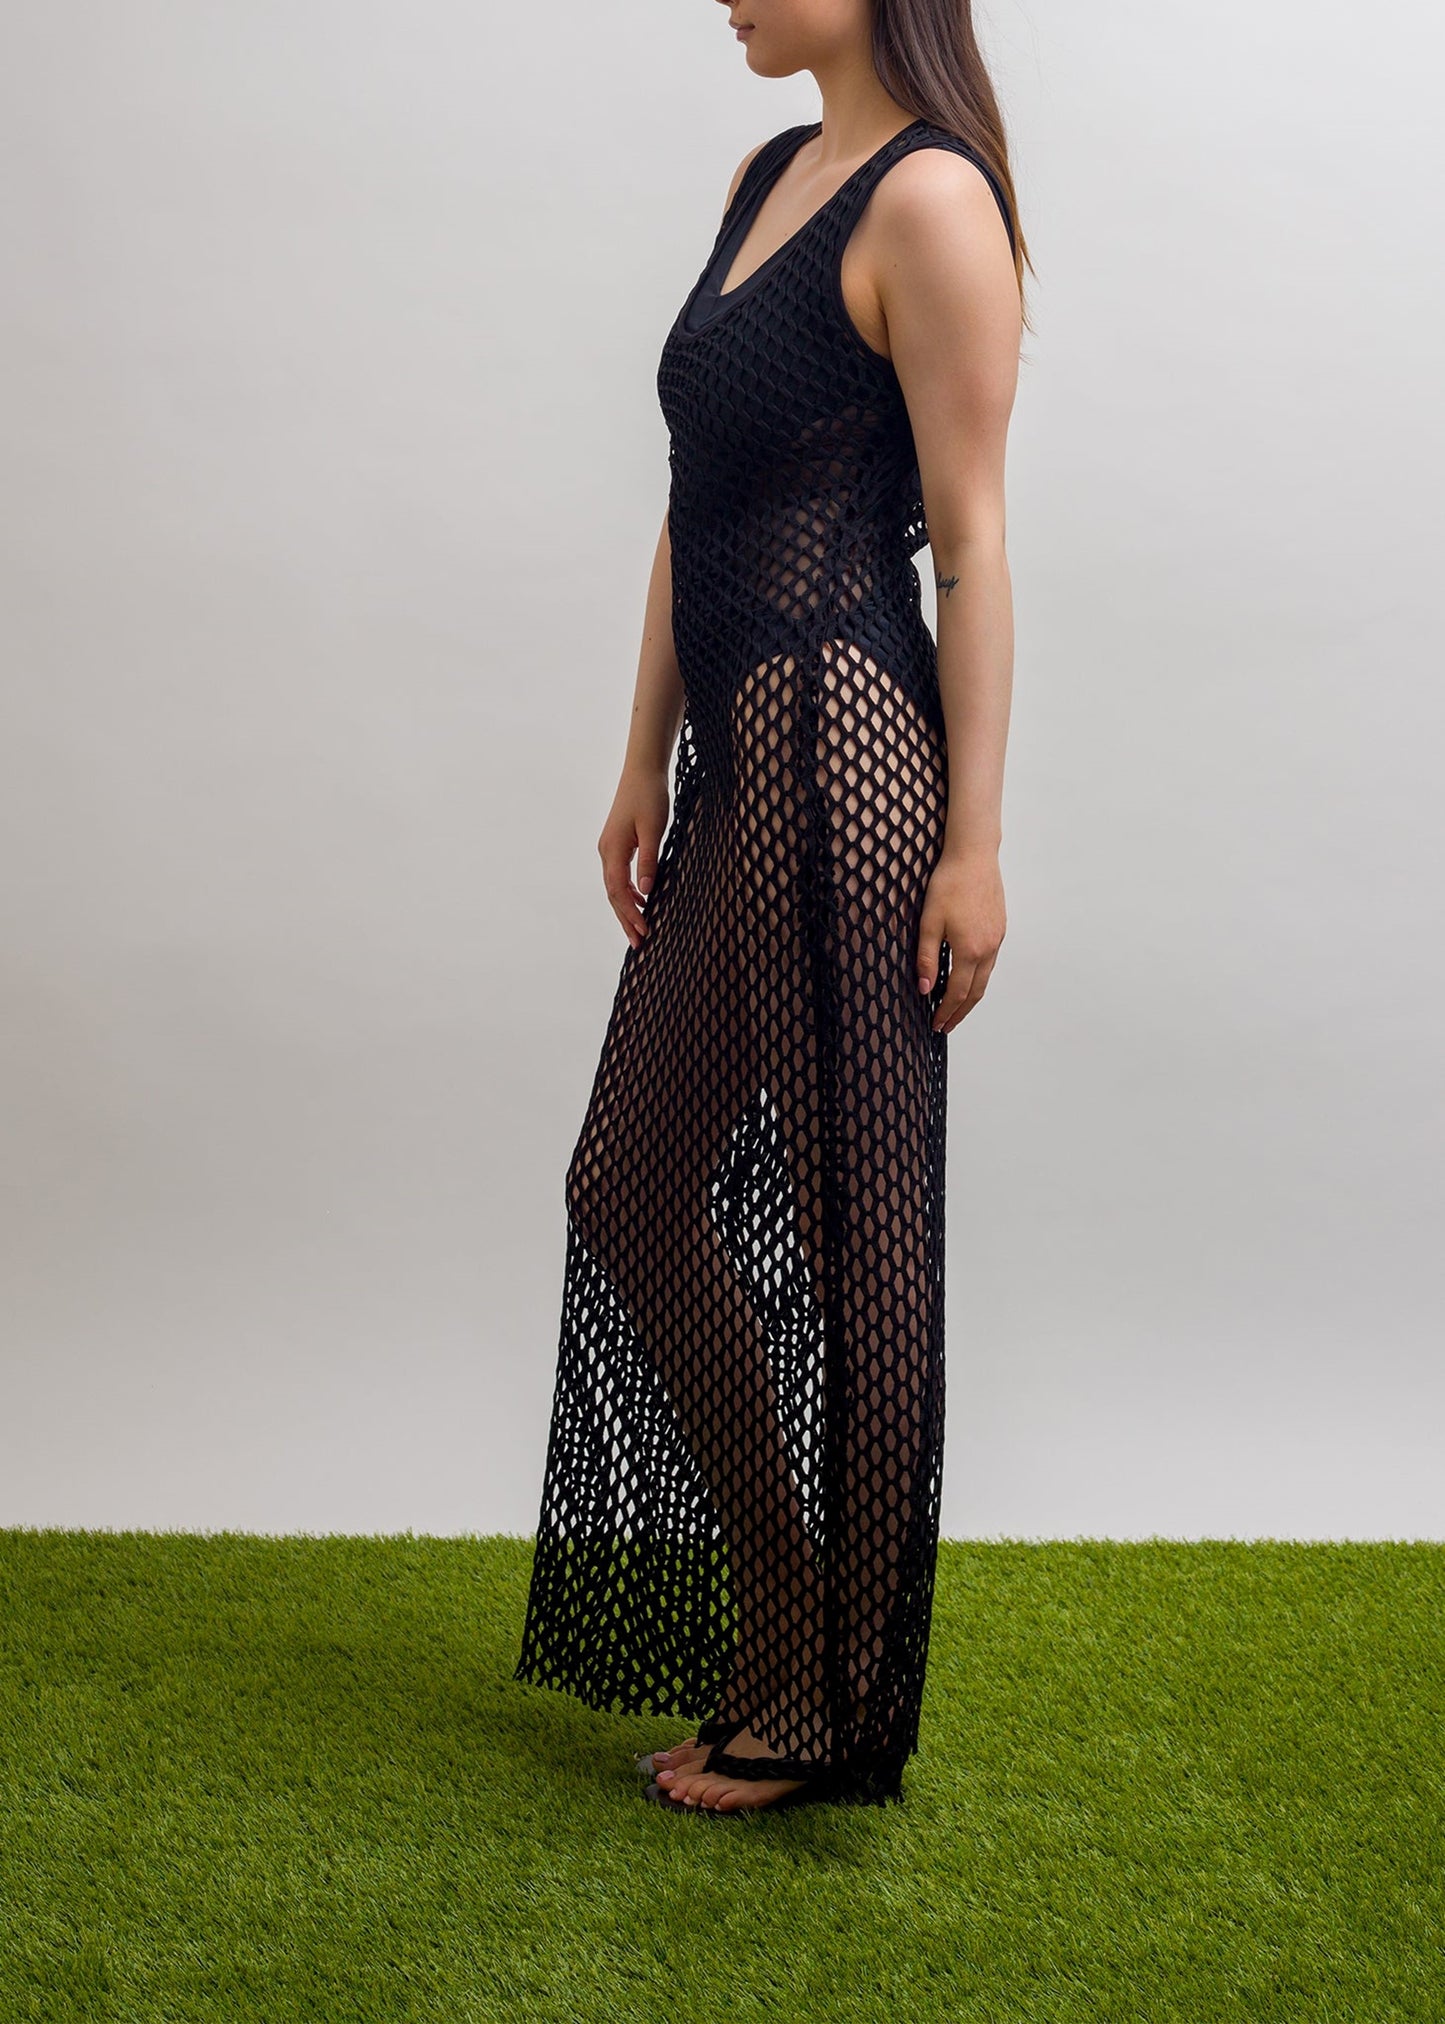 Desi Crochet Pool Dress - Ms.Meri Mak